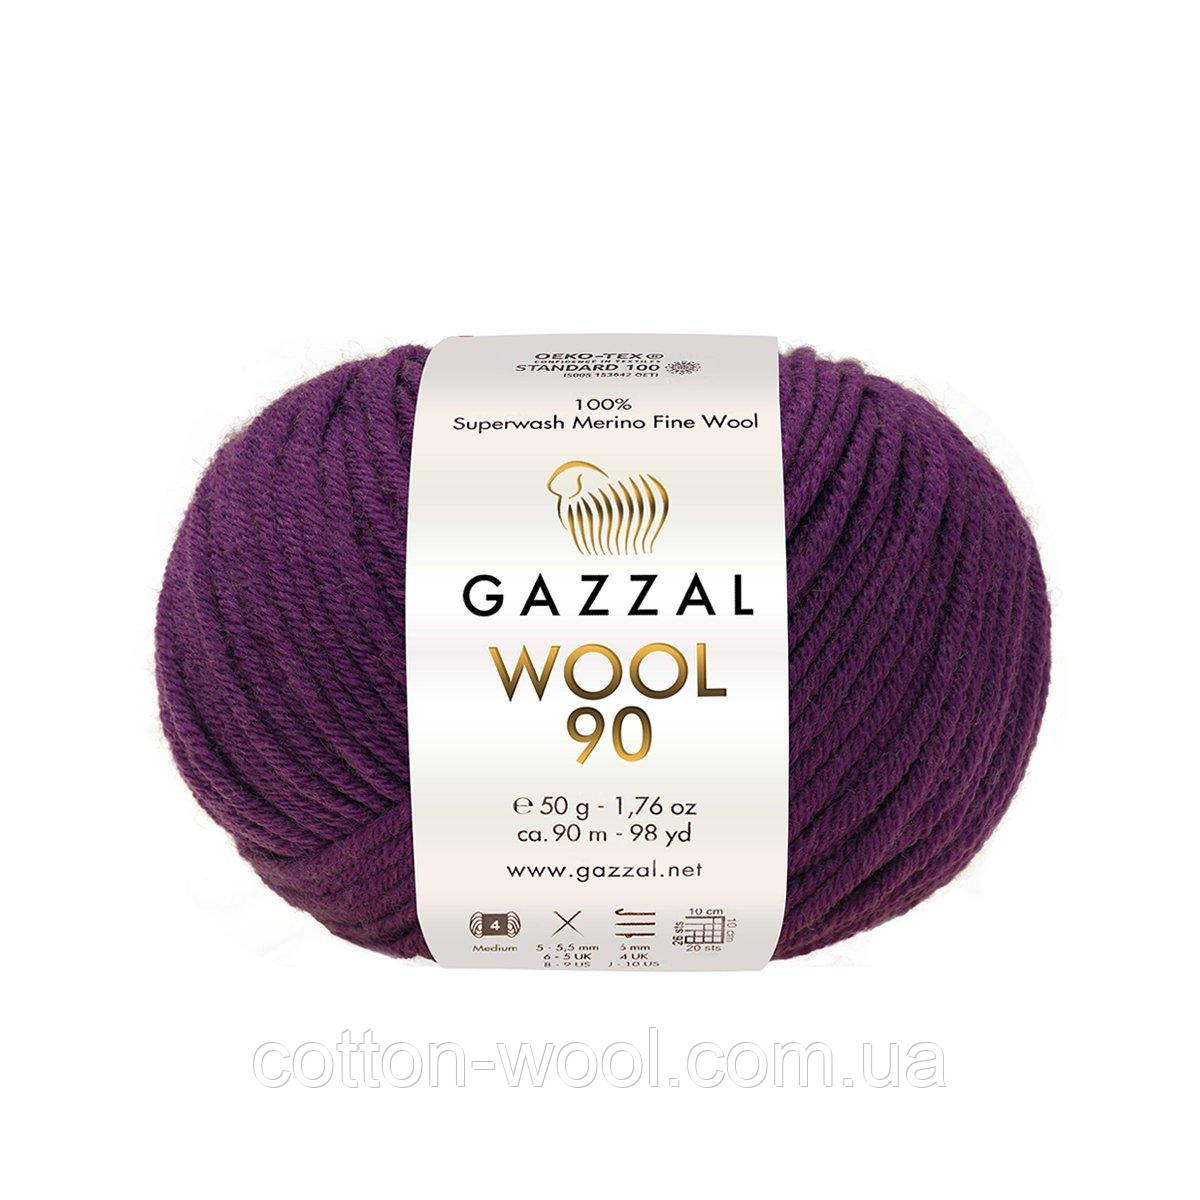 Gazzal Wool 90 (Газзал Вул 90) 3684